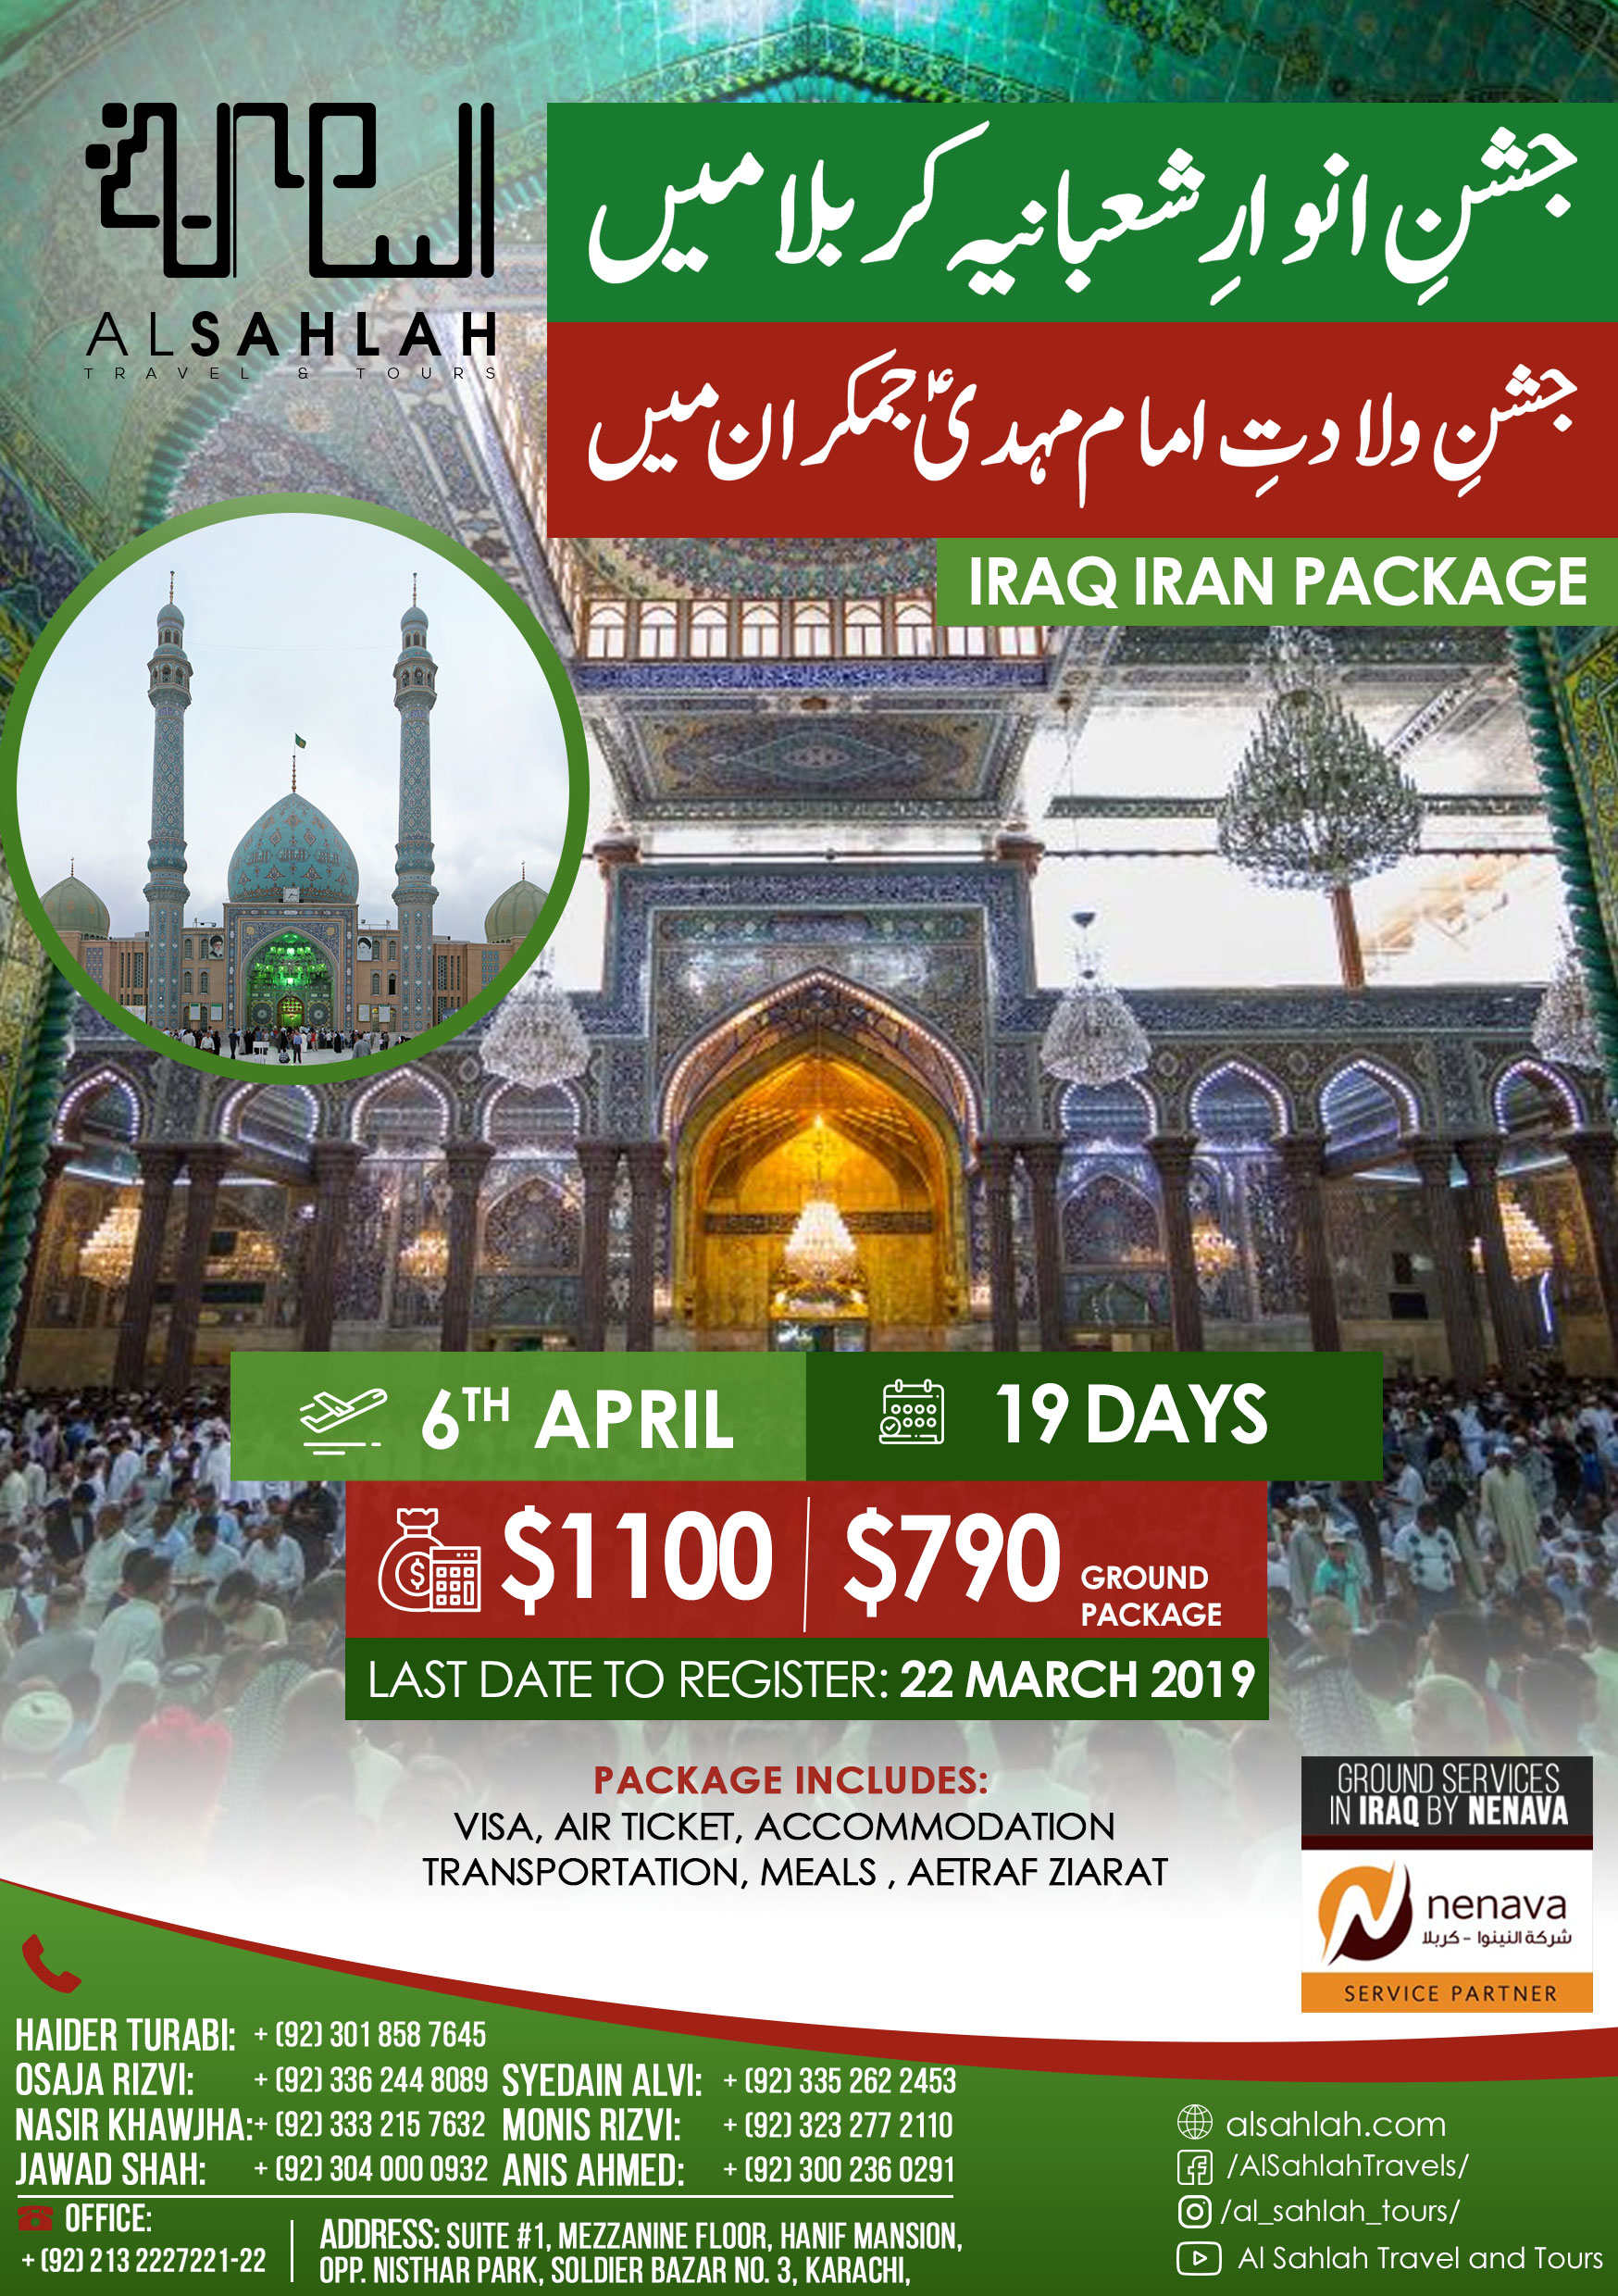 Anwar-e-Shabania-in-Karbala-and-Jamkaran-iran-iraq ziarat package-Handbill